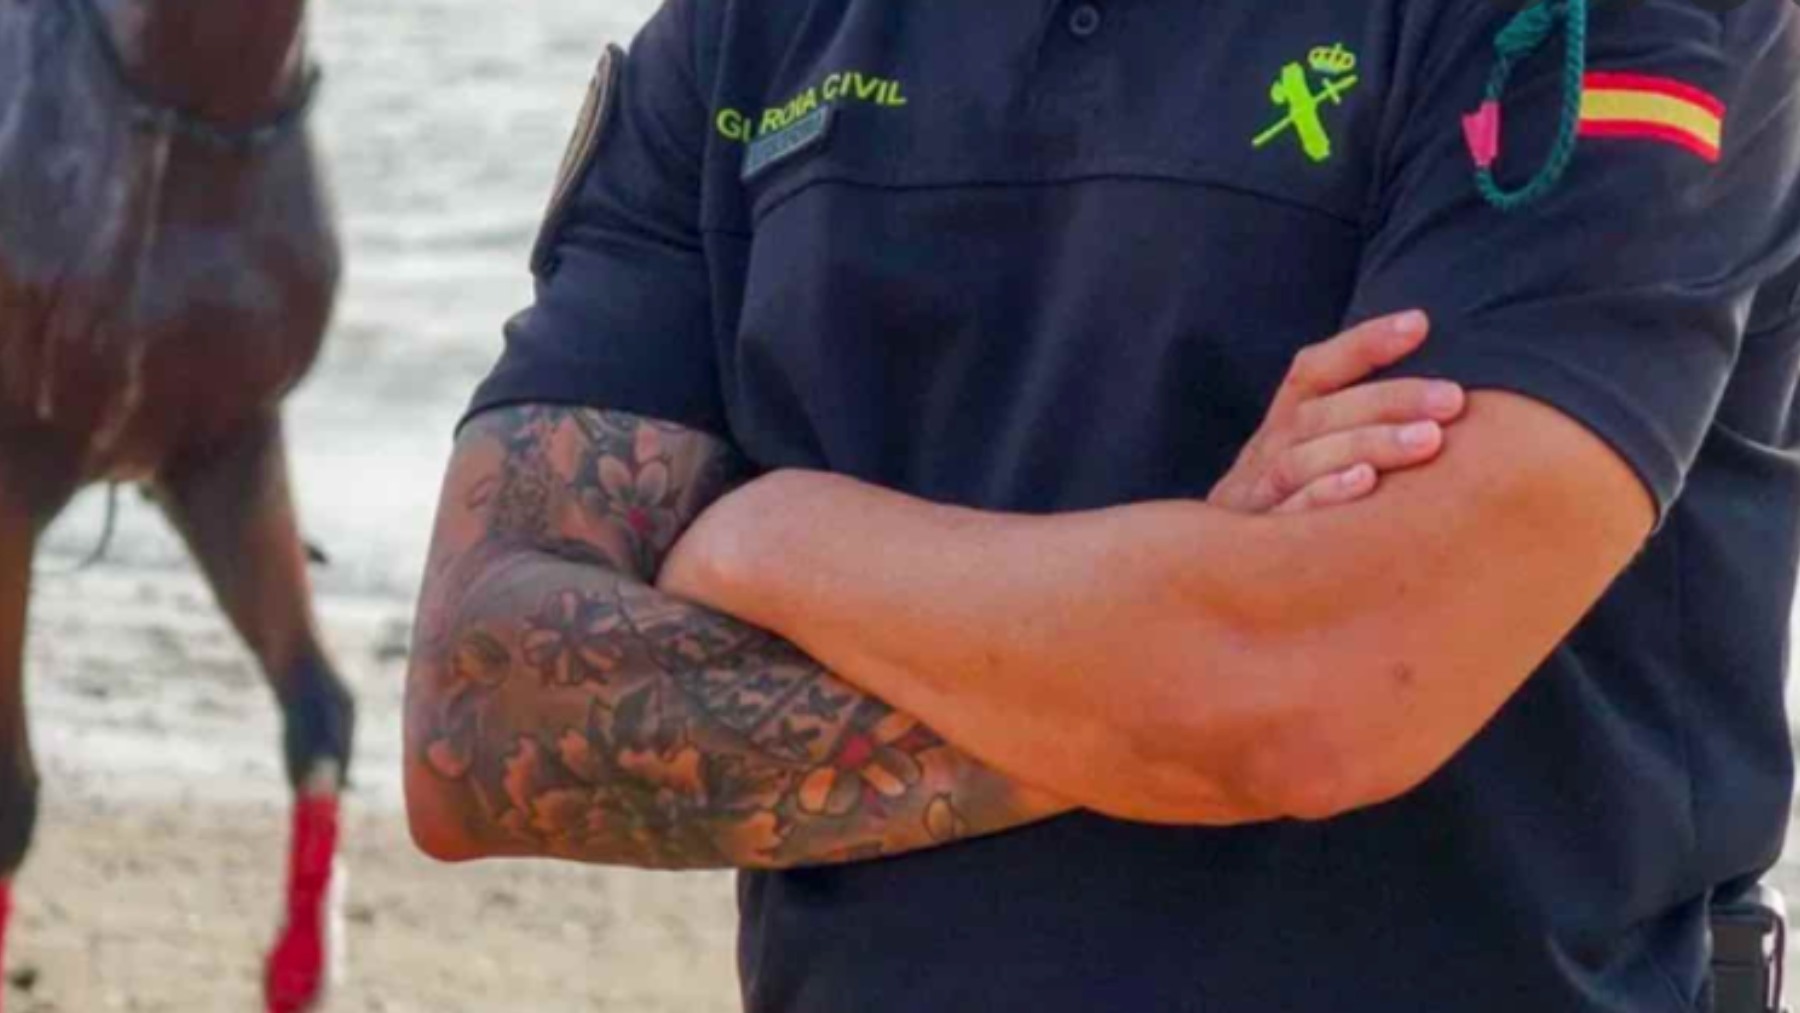 Un guardia civil con un tatuaje en el brazo.